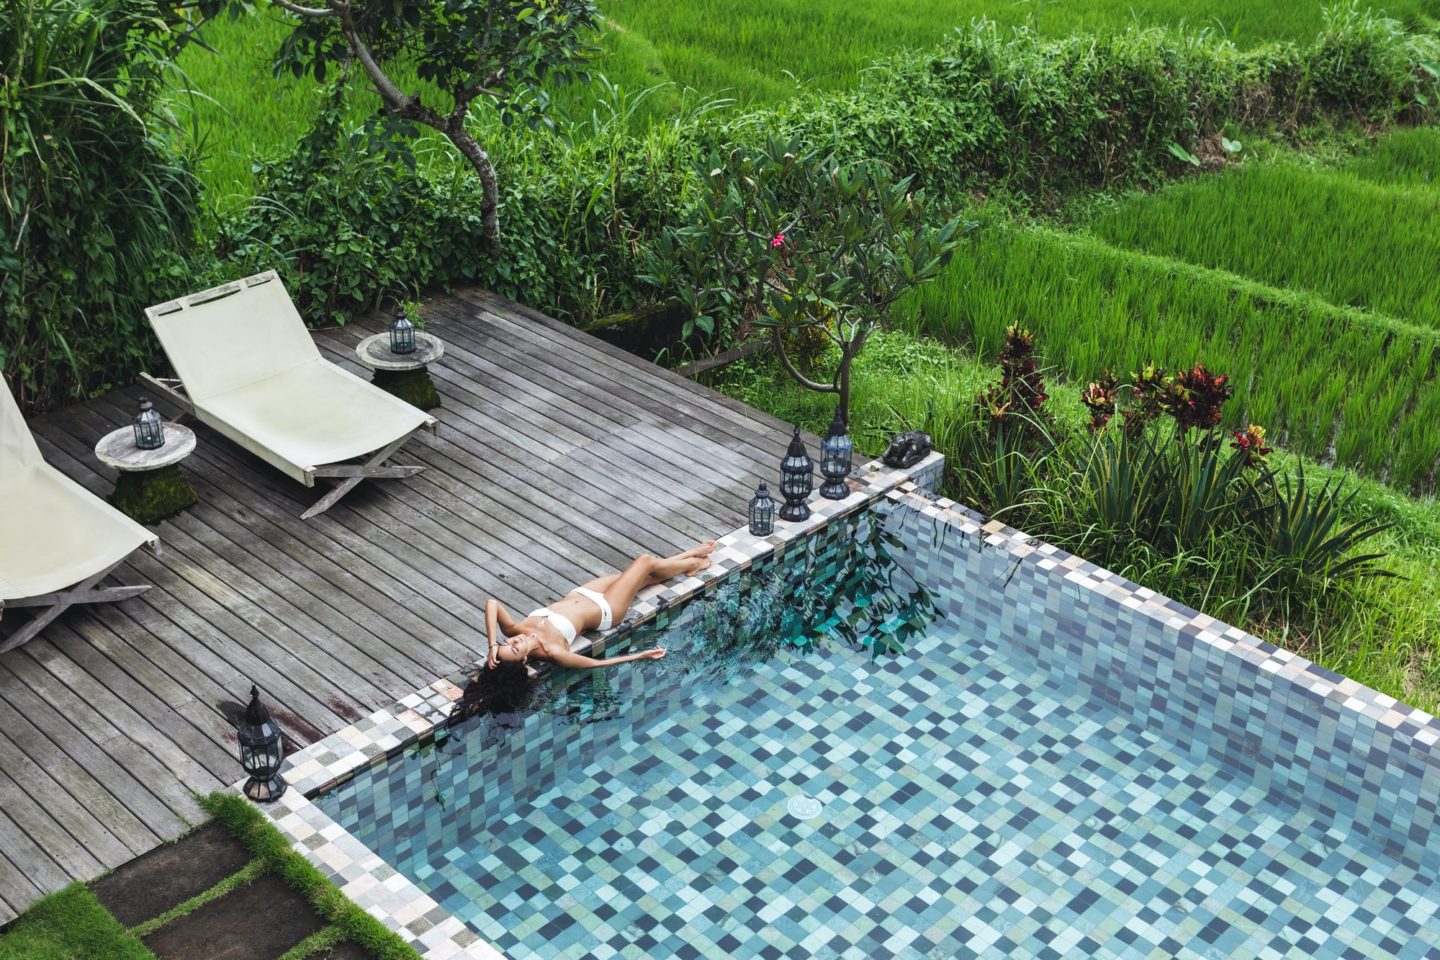 Young slim girl relaxing near luxury pool in Bali rice fields